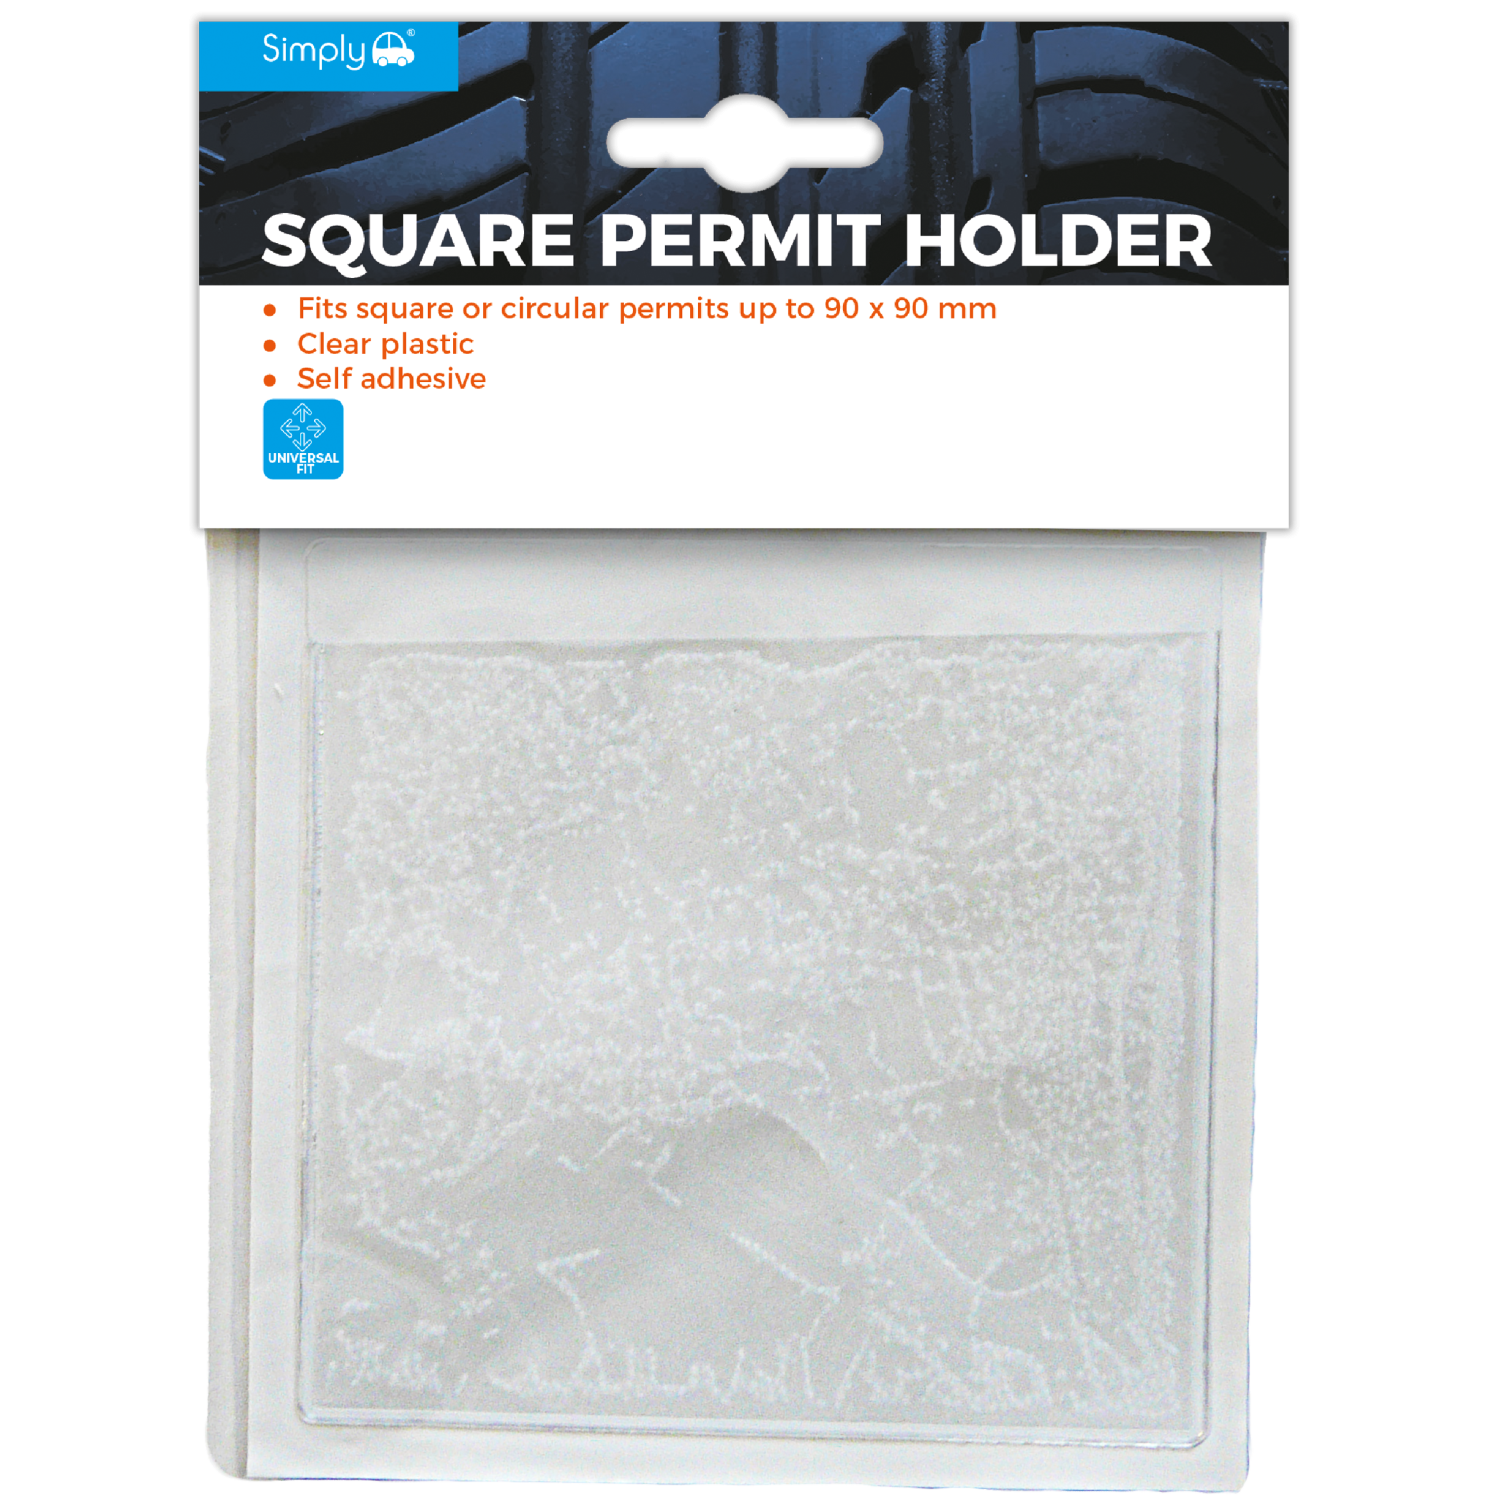 Halfords Square Permit Holder